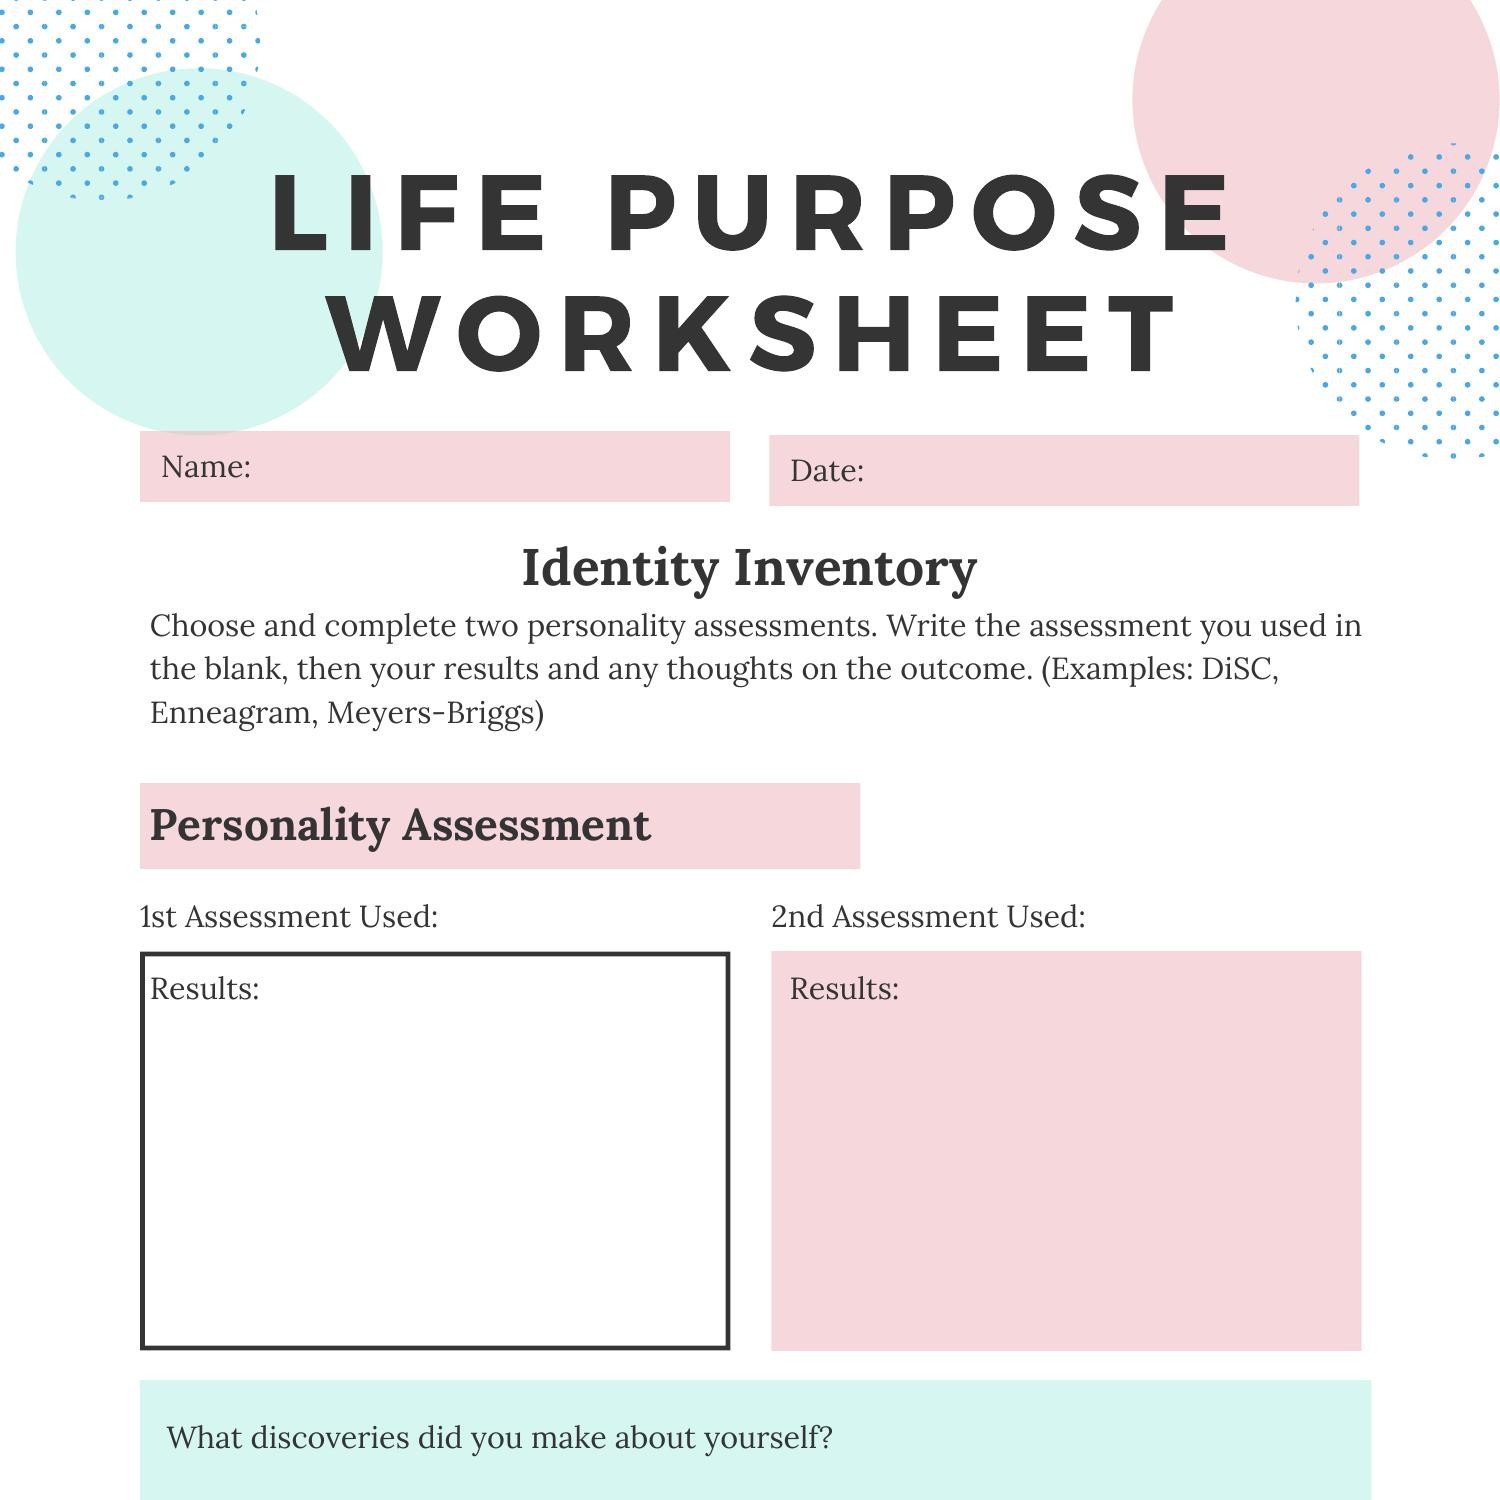 life-purpose-worksheet-10-2018-pdf-docdroid